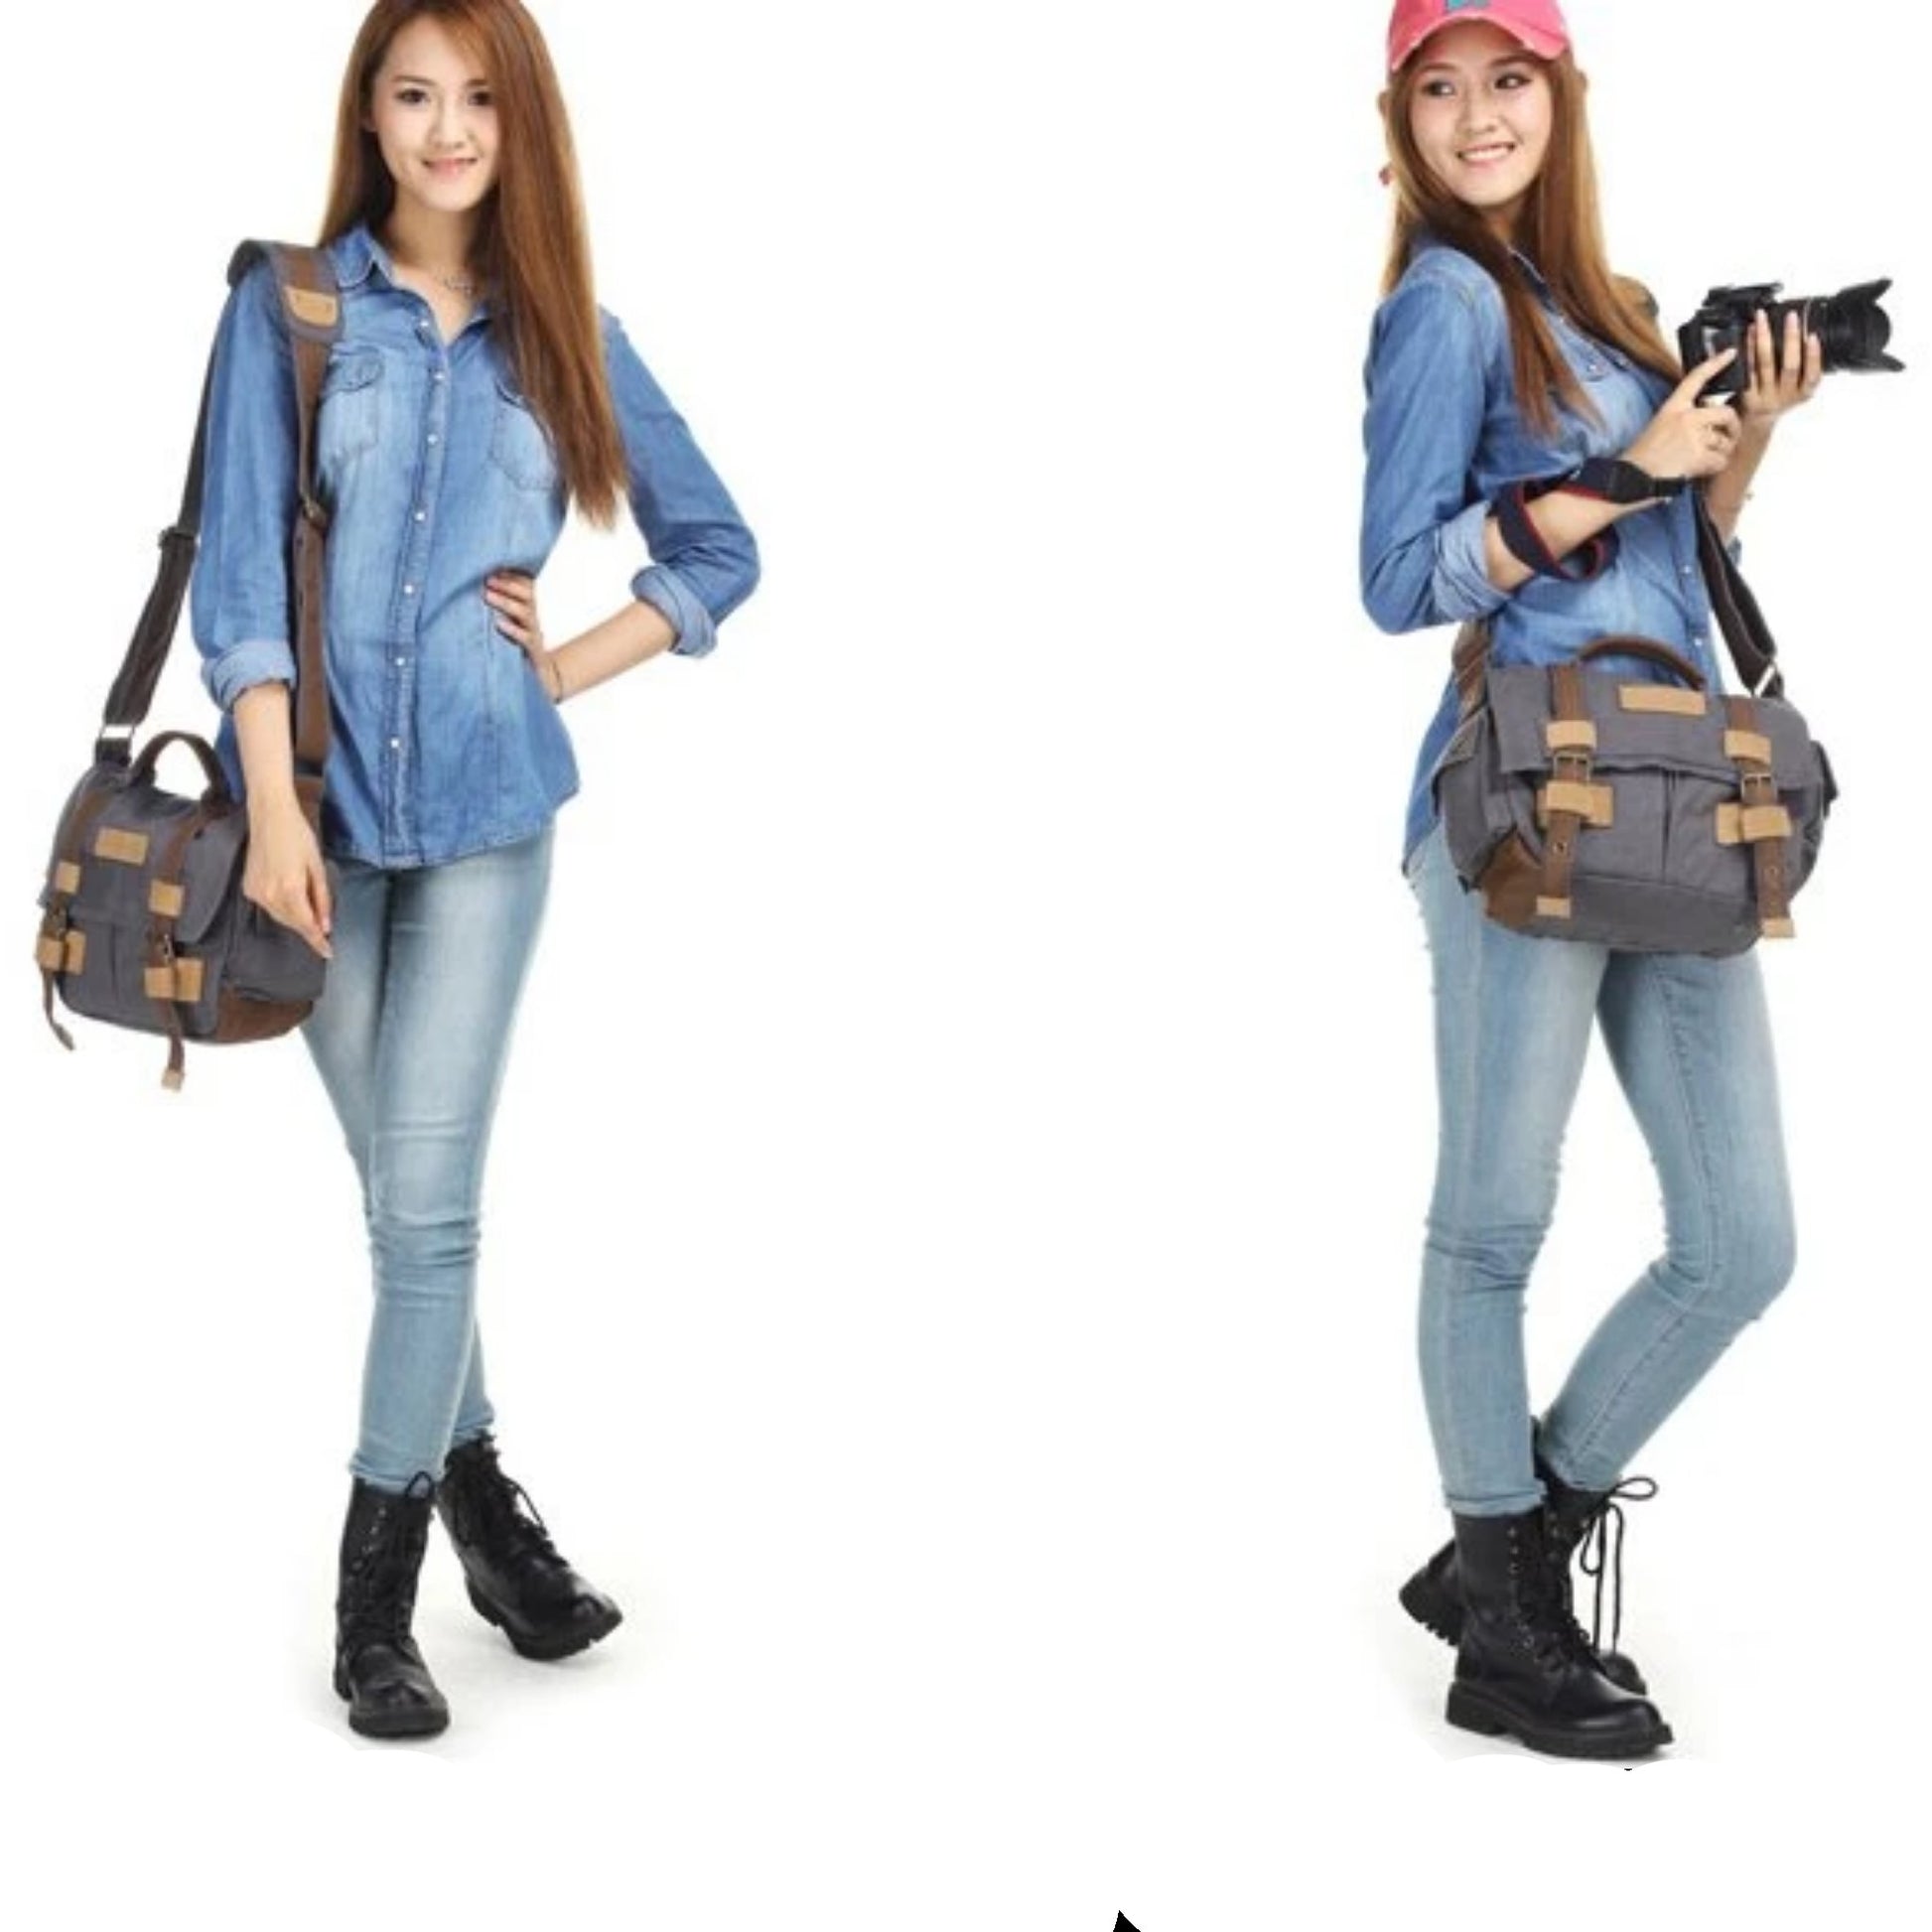 Waxed Canvas DSLR Camera Messenger Bag, Diaper Bag - Medium - Blue Sebe Handmade Leather Bags